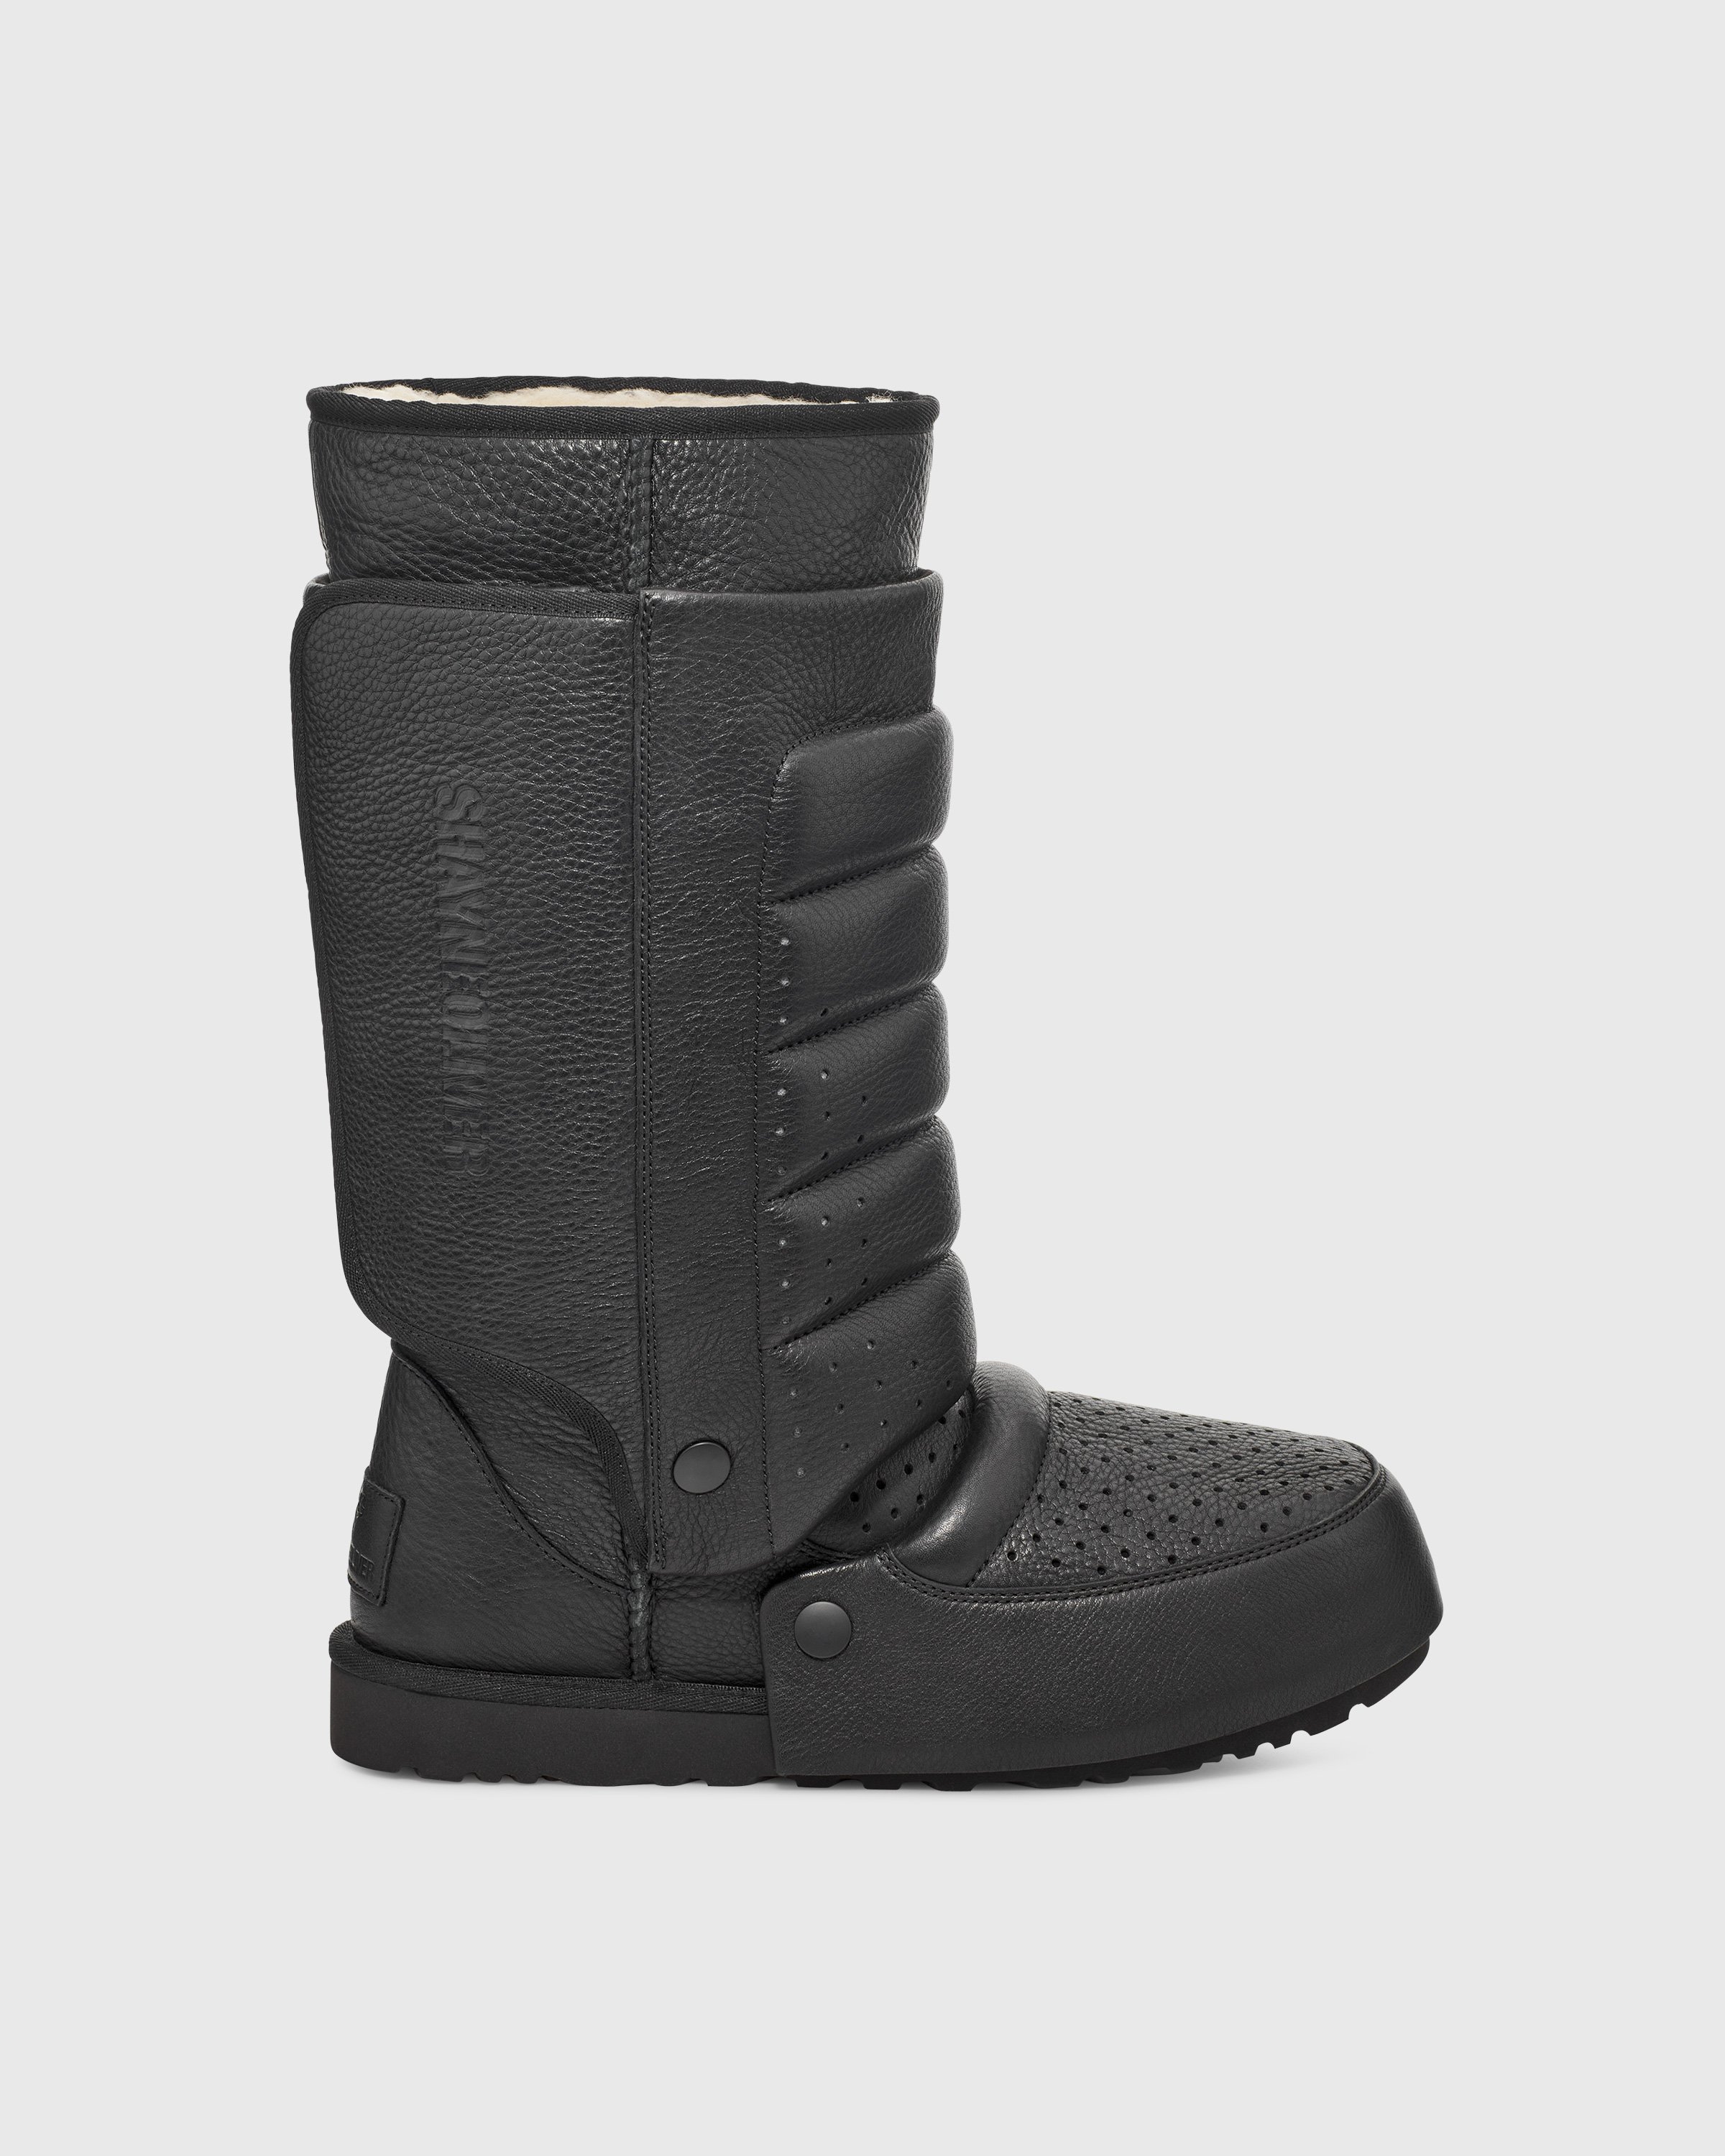 Ugg x Shayne Oliver - Tall Boot Black - Footwear - Black - Image 1